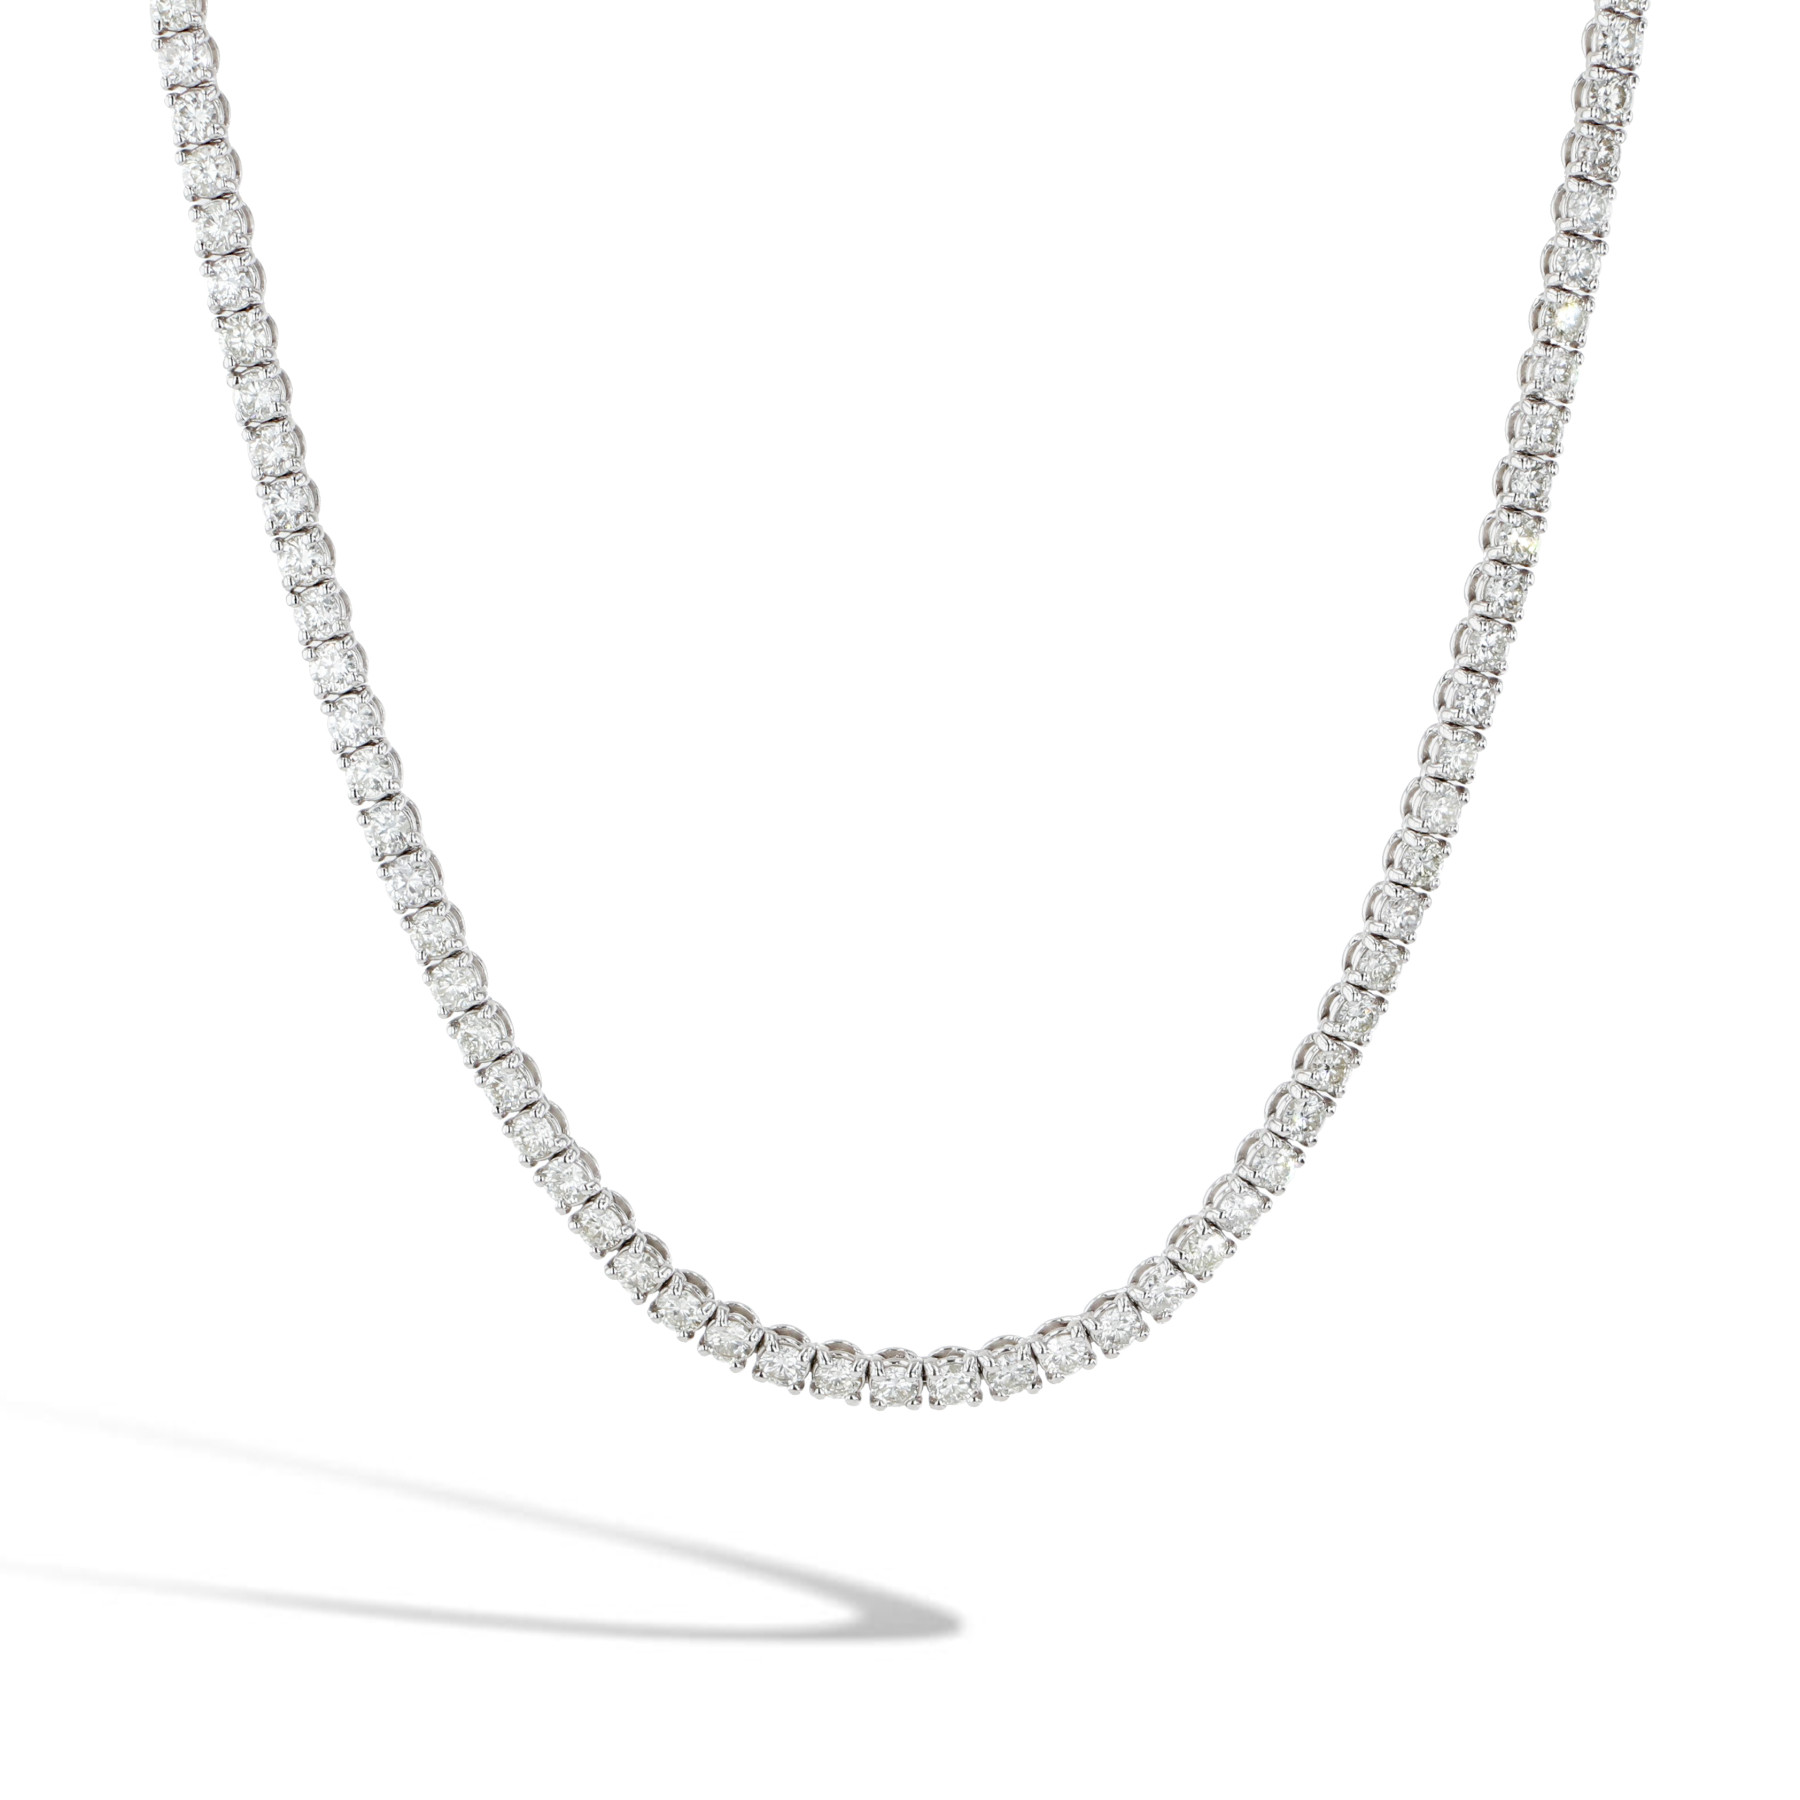 9 Carat Diamond Tennis Necklace in 14K White Gold